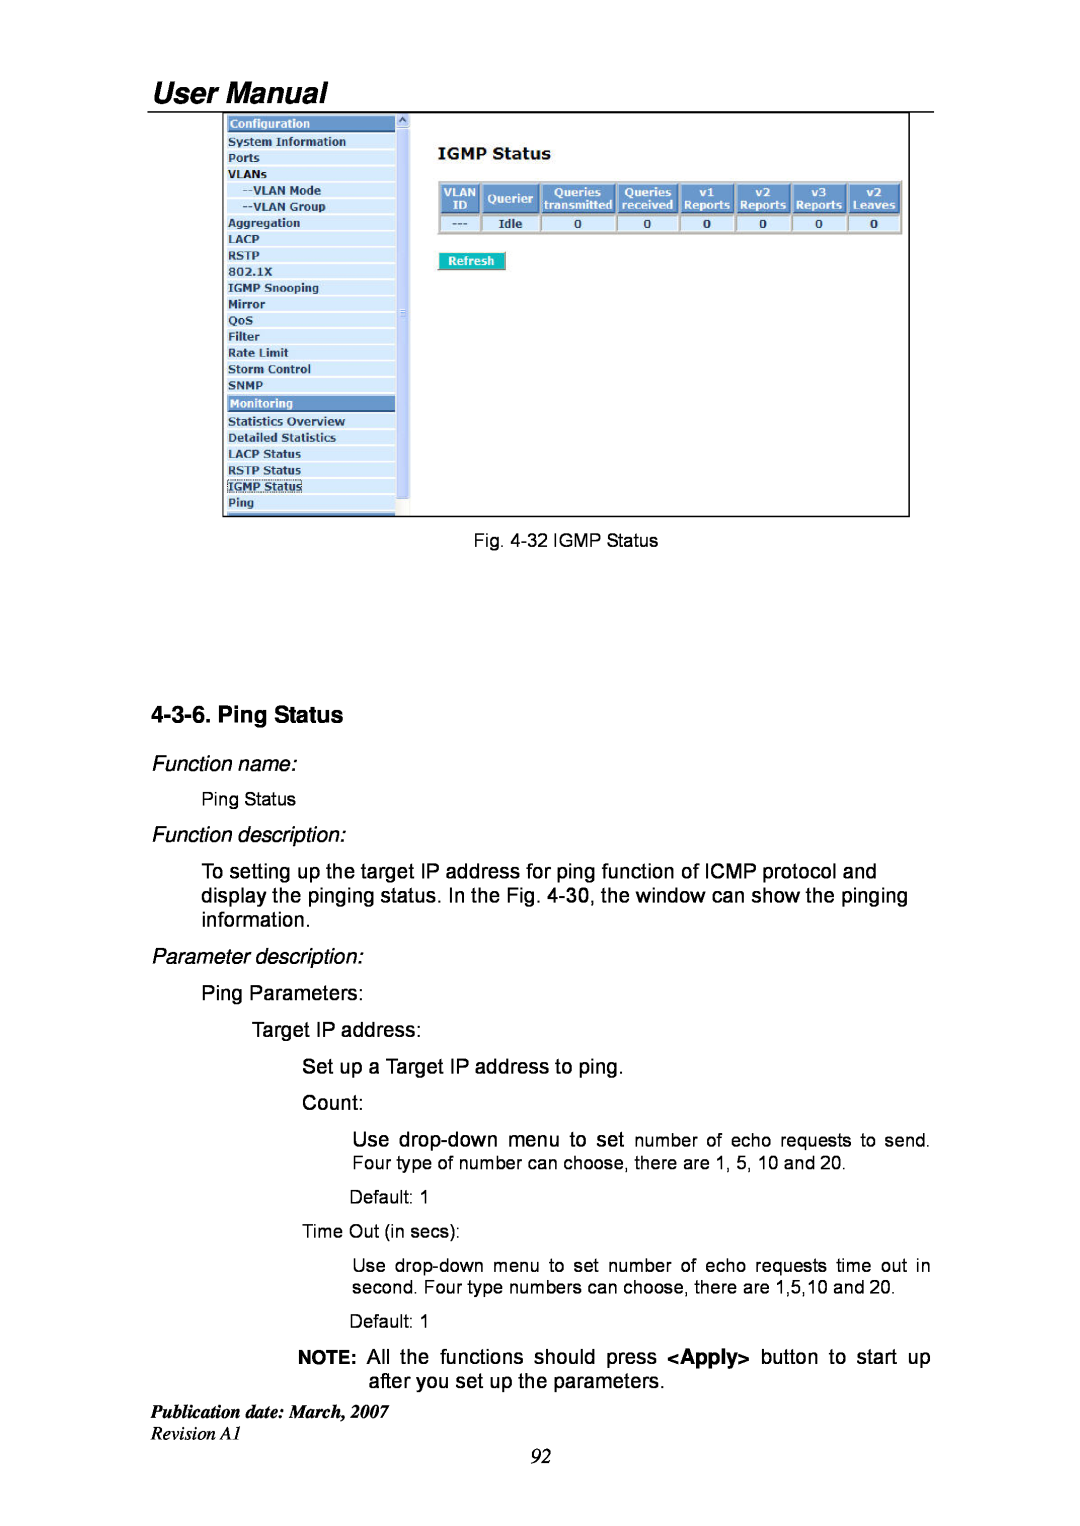 Ruby Tech GS-1224L manual Ping Status, User Manual, Function name, Function description, Parameter description 